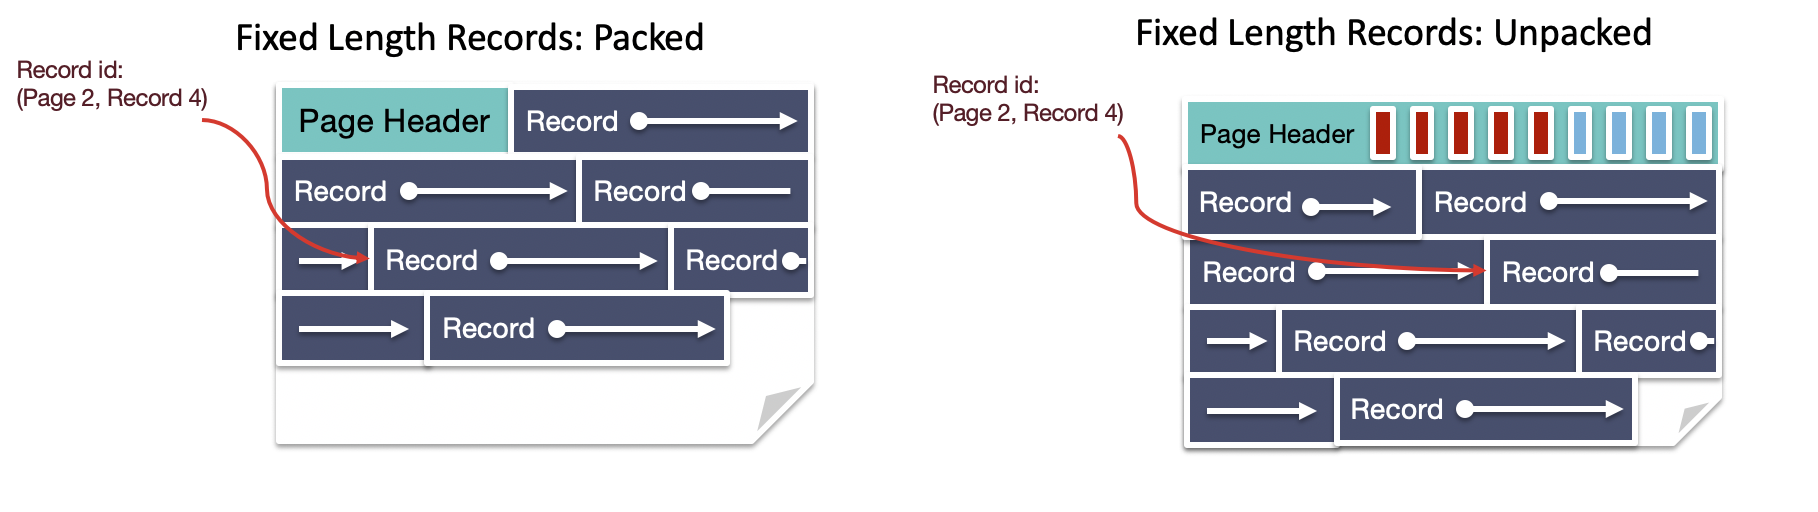 fixed_length_records